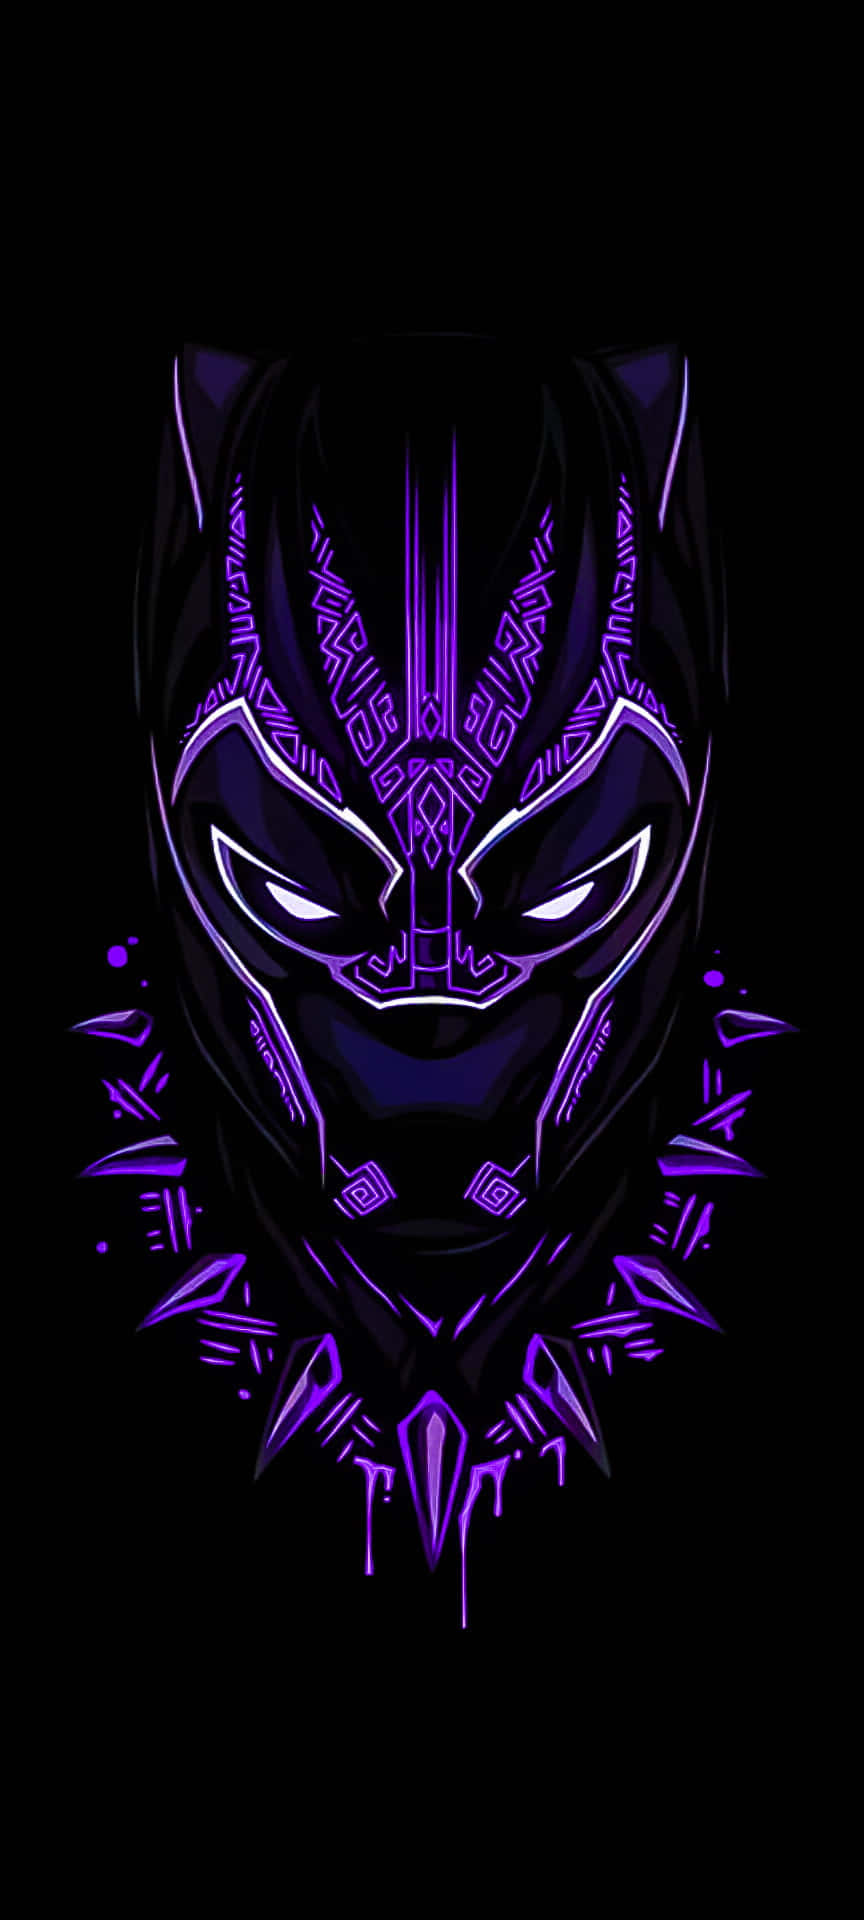 Fanartdi Black Panther - Sfondo Marvel Per Pixel 3xl